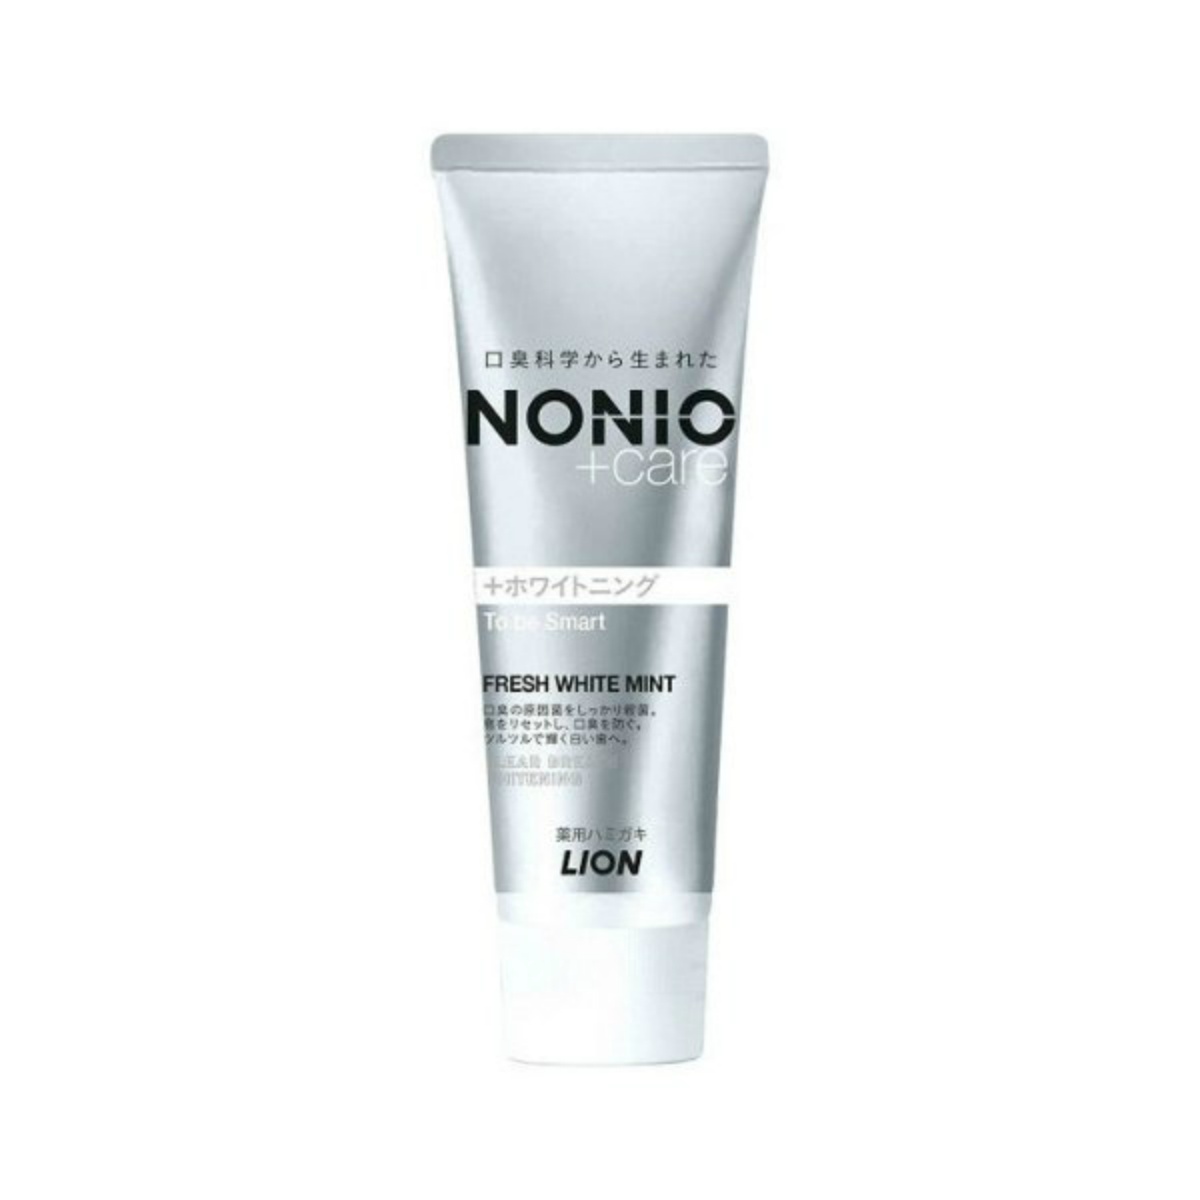 LION NONIO プラスホワイトニング ハミガキ 130g×5本 NONIO 歯磨き粉の商品画像